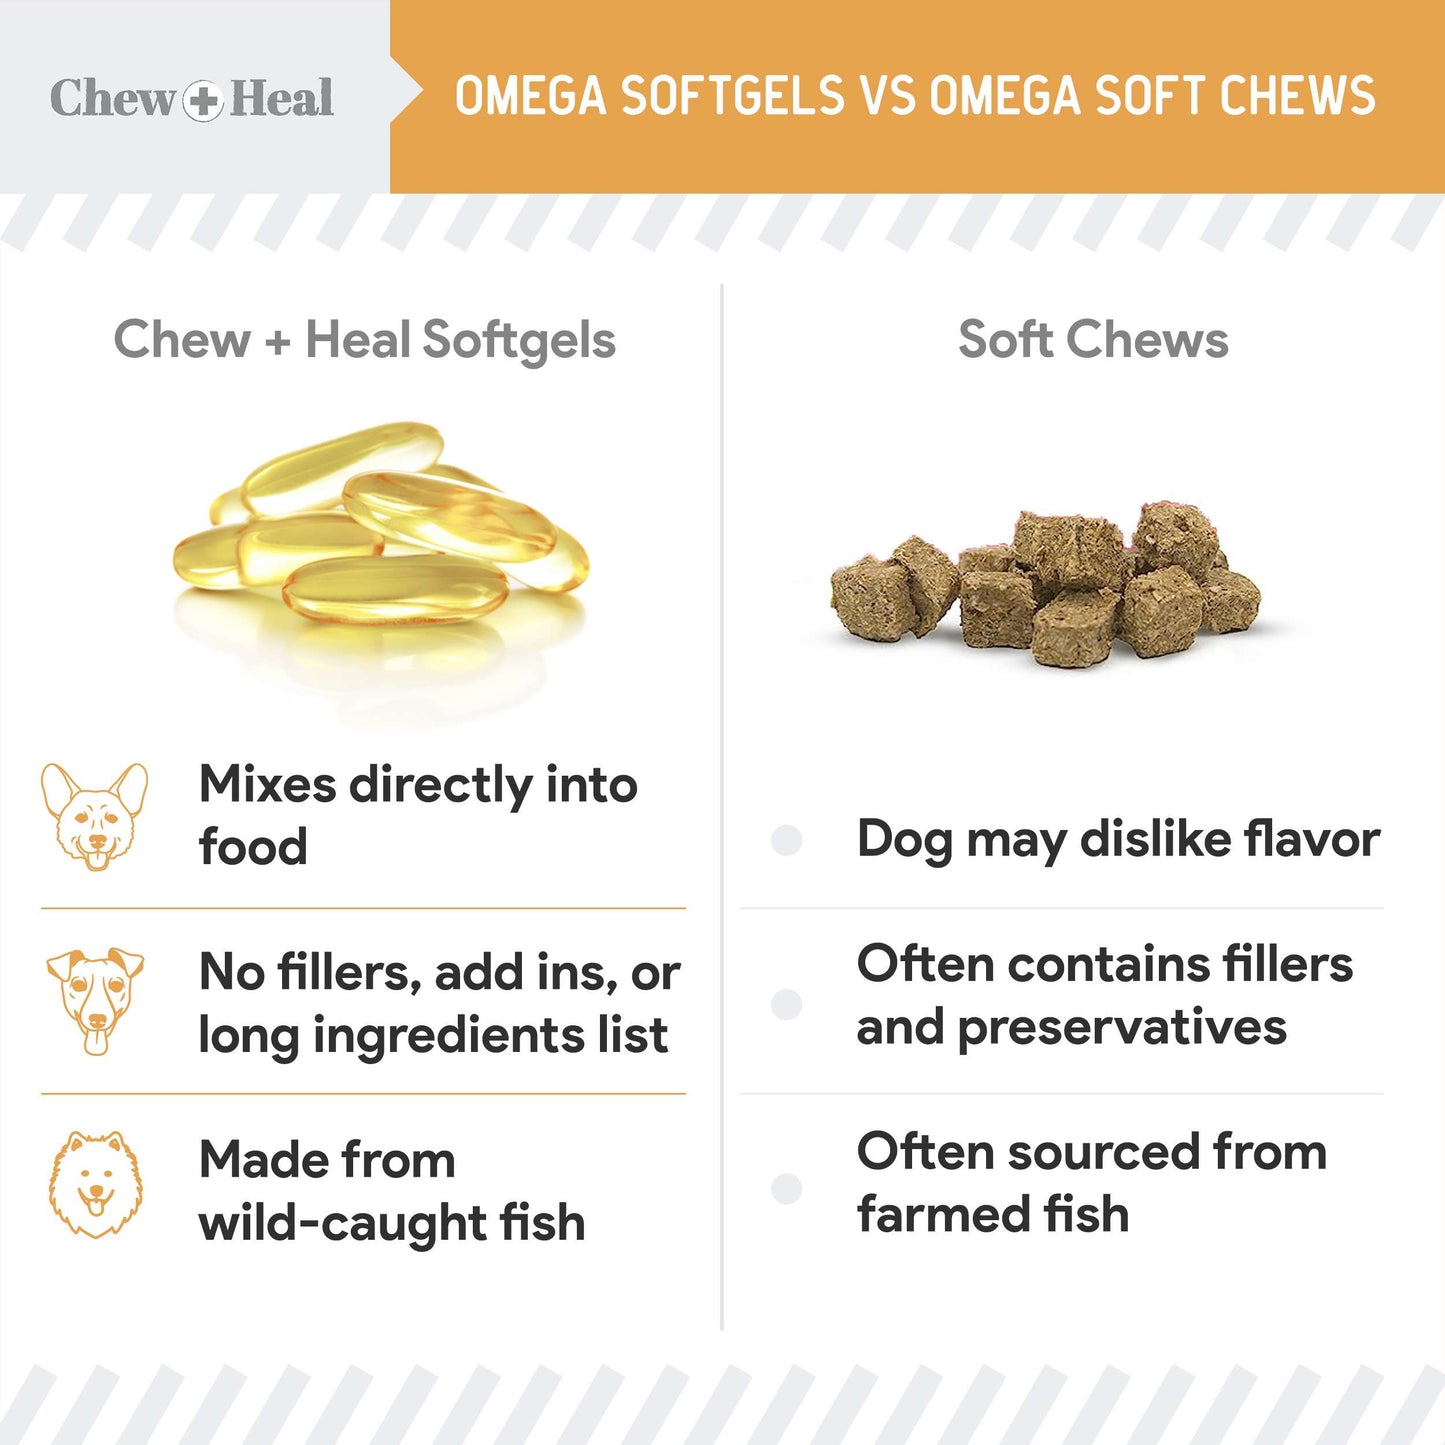 Omega 3 Fish Oil for Dogs - 180 Softgel